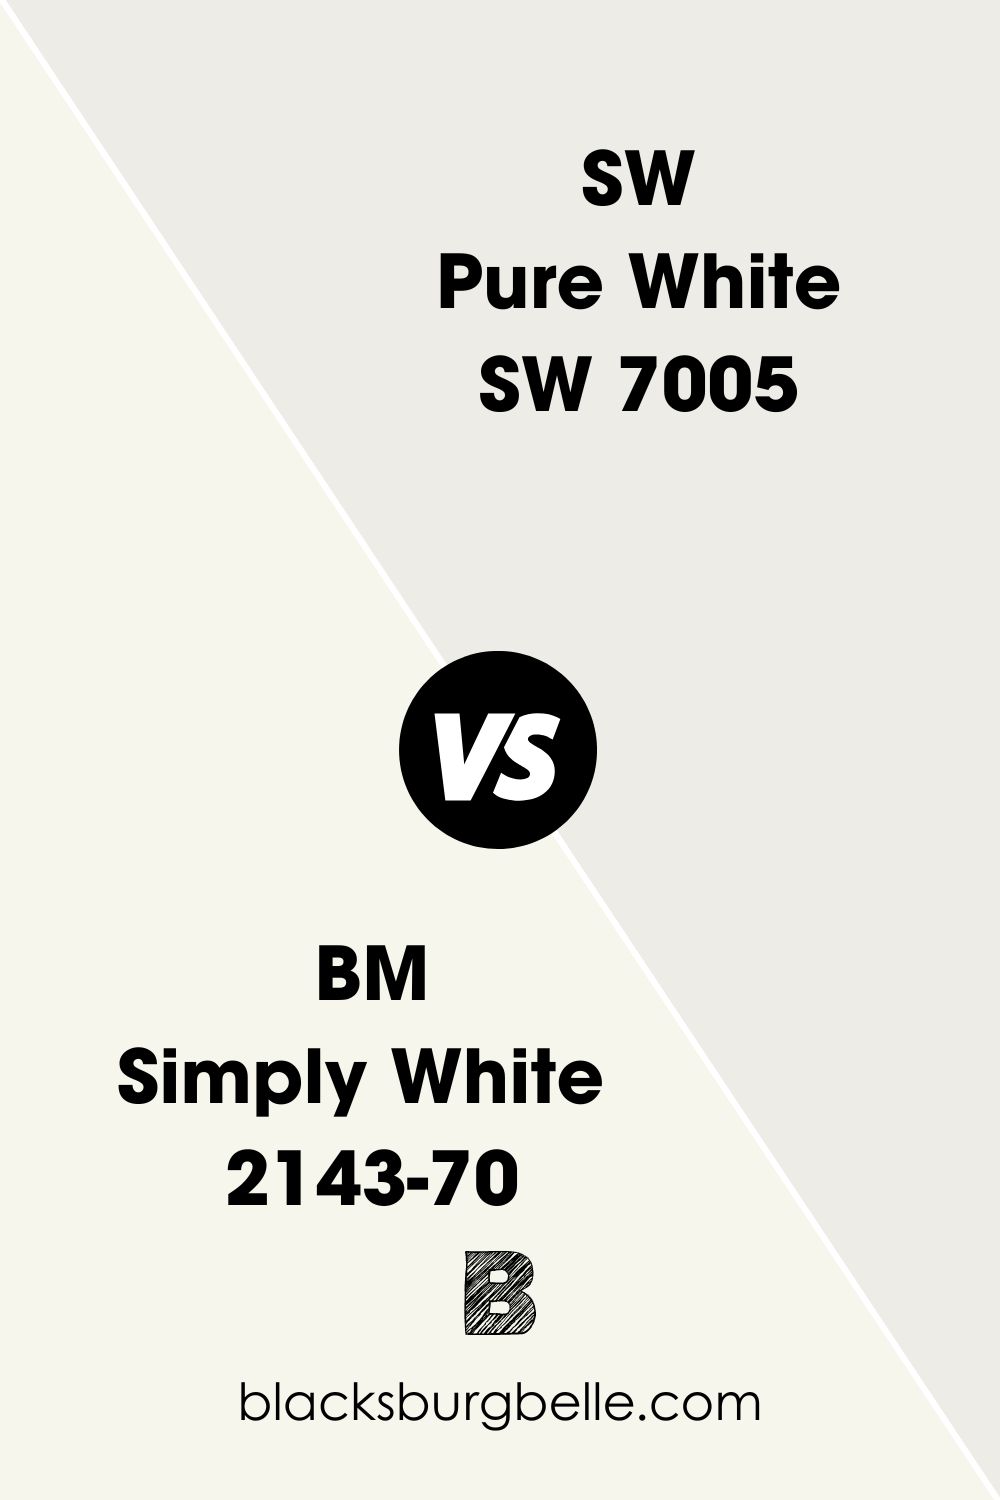 BM Simply White 2143-70